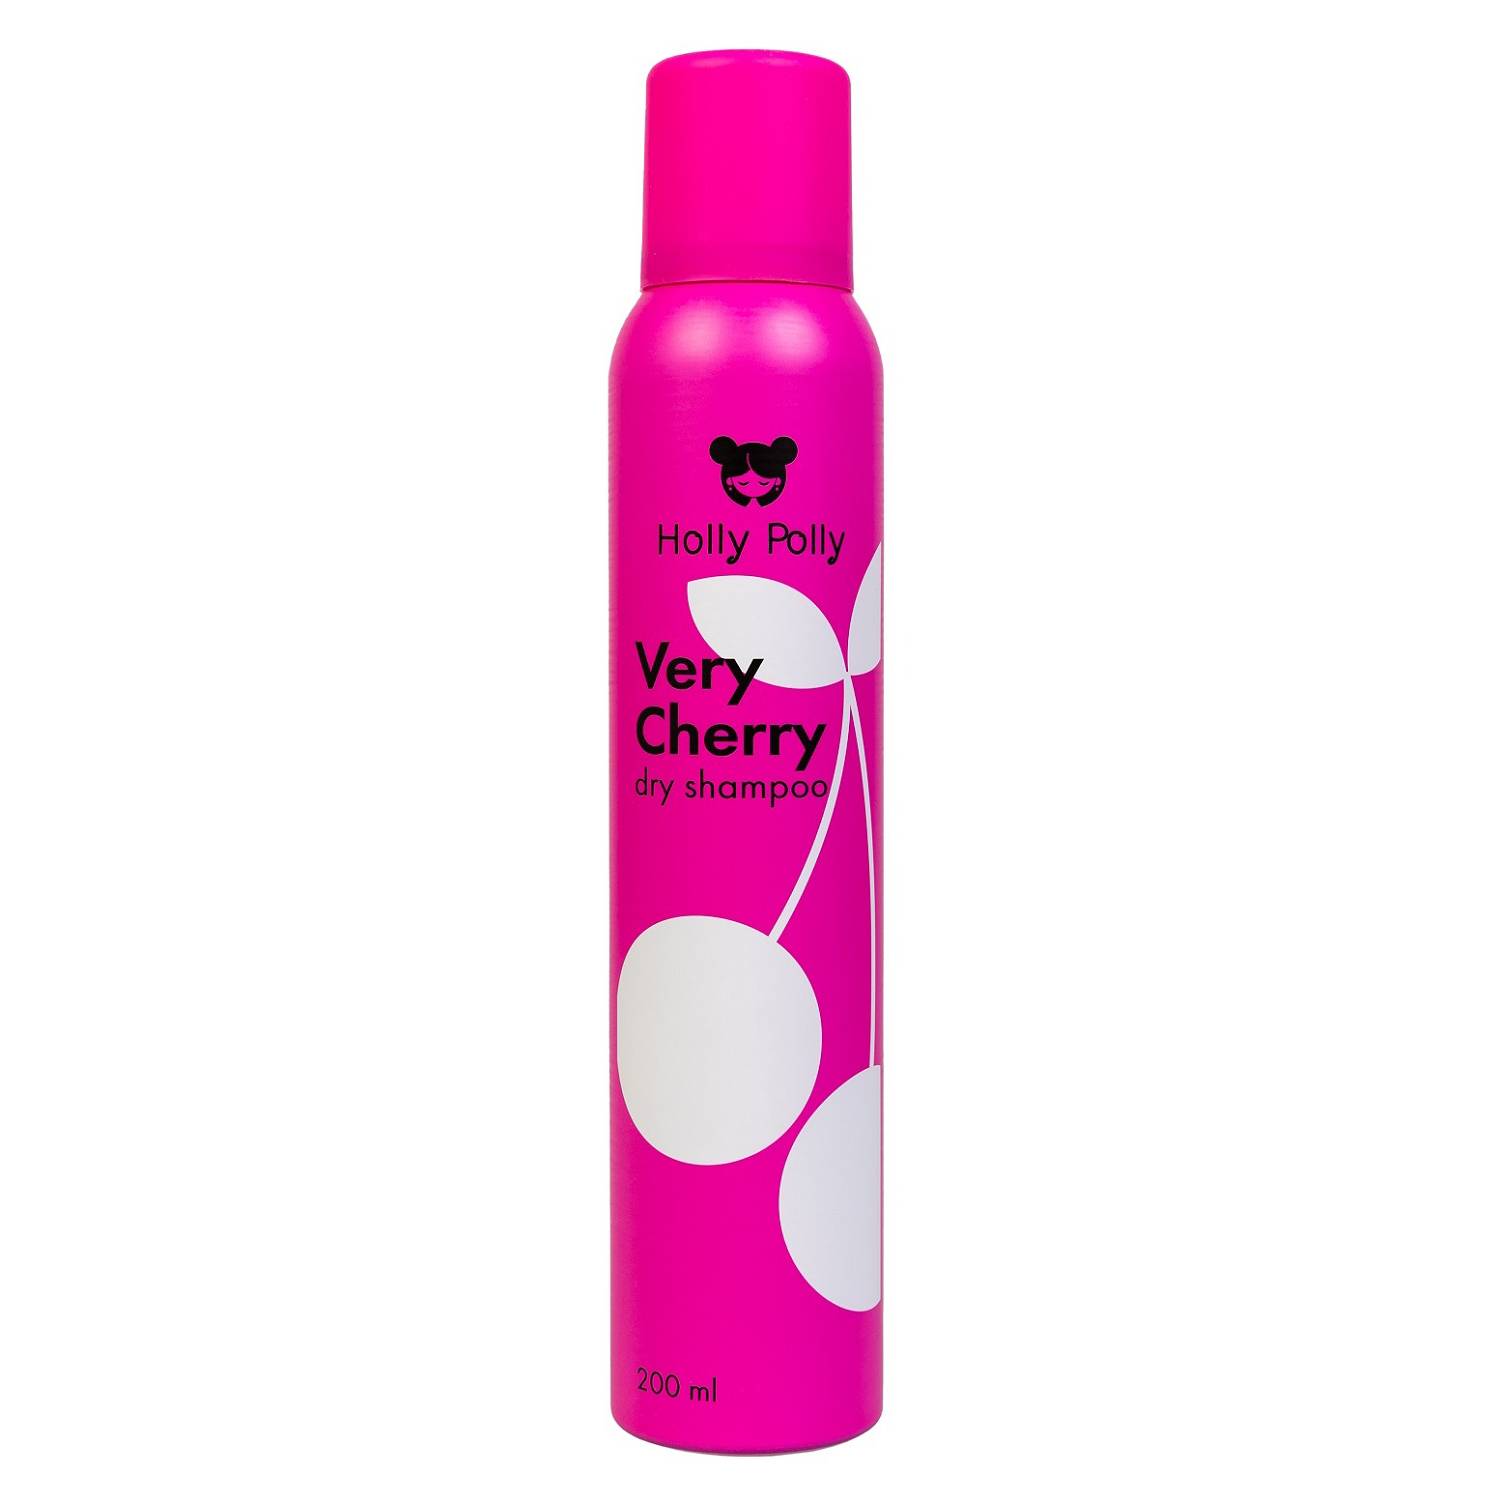 Holly Polly Сухой шампунь для всех типов волос Very Cherry, 200 мл (Holly Polly, Dry Shampoo)